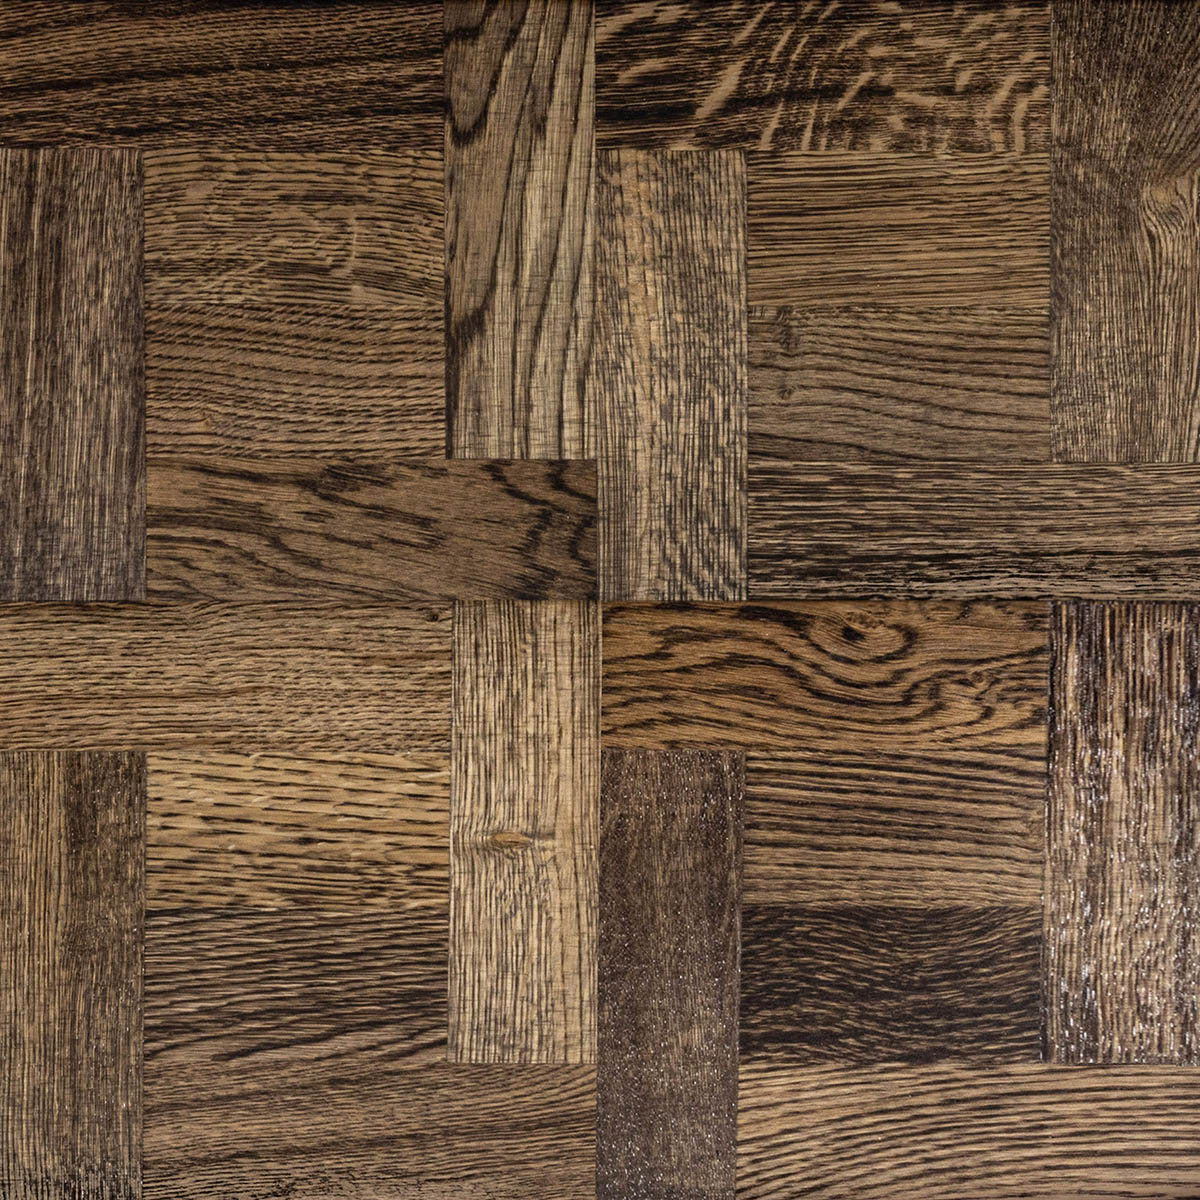 Foxtrot Park - Geometric wood floor from JackEvie